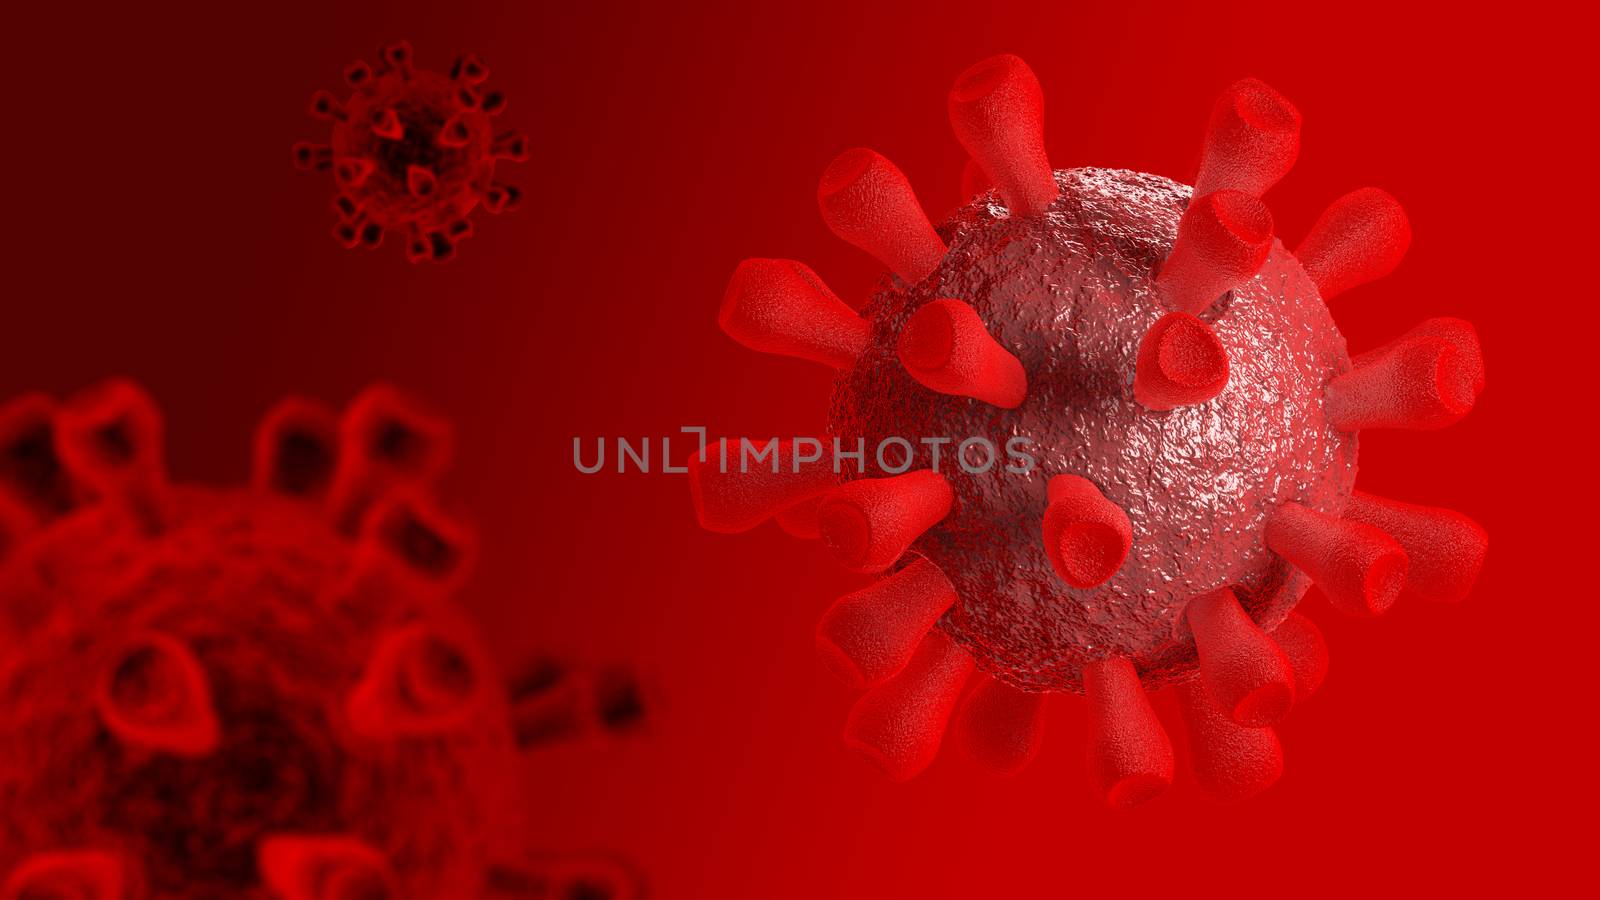 Microscopic view of coronavirus. Concept illustration. 3D Rendering